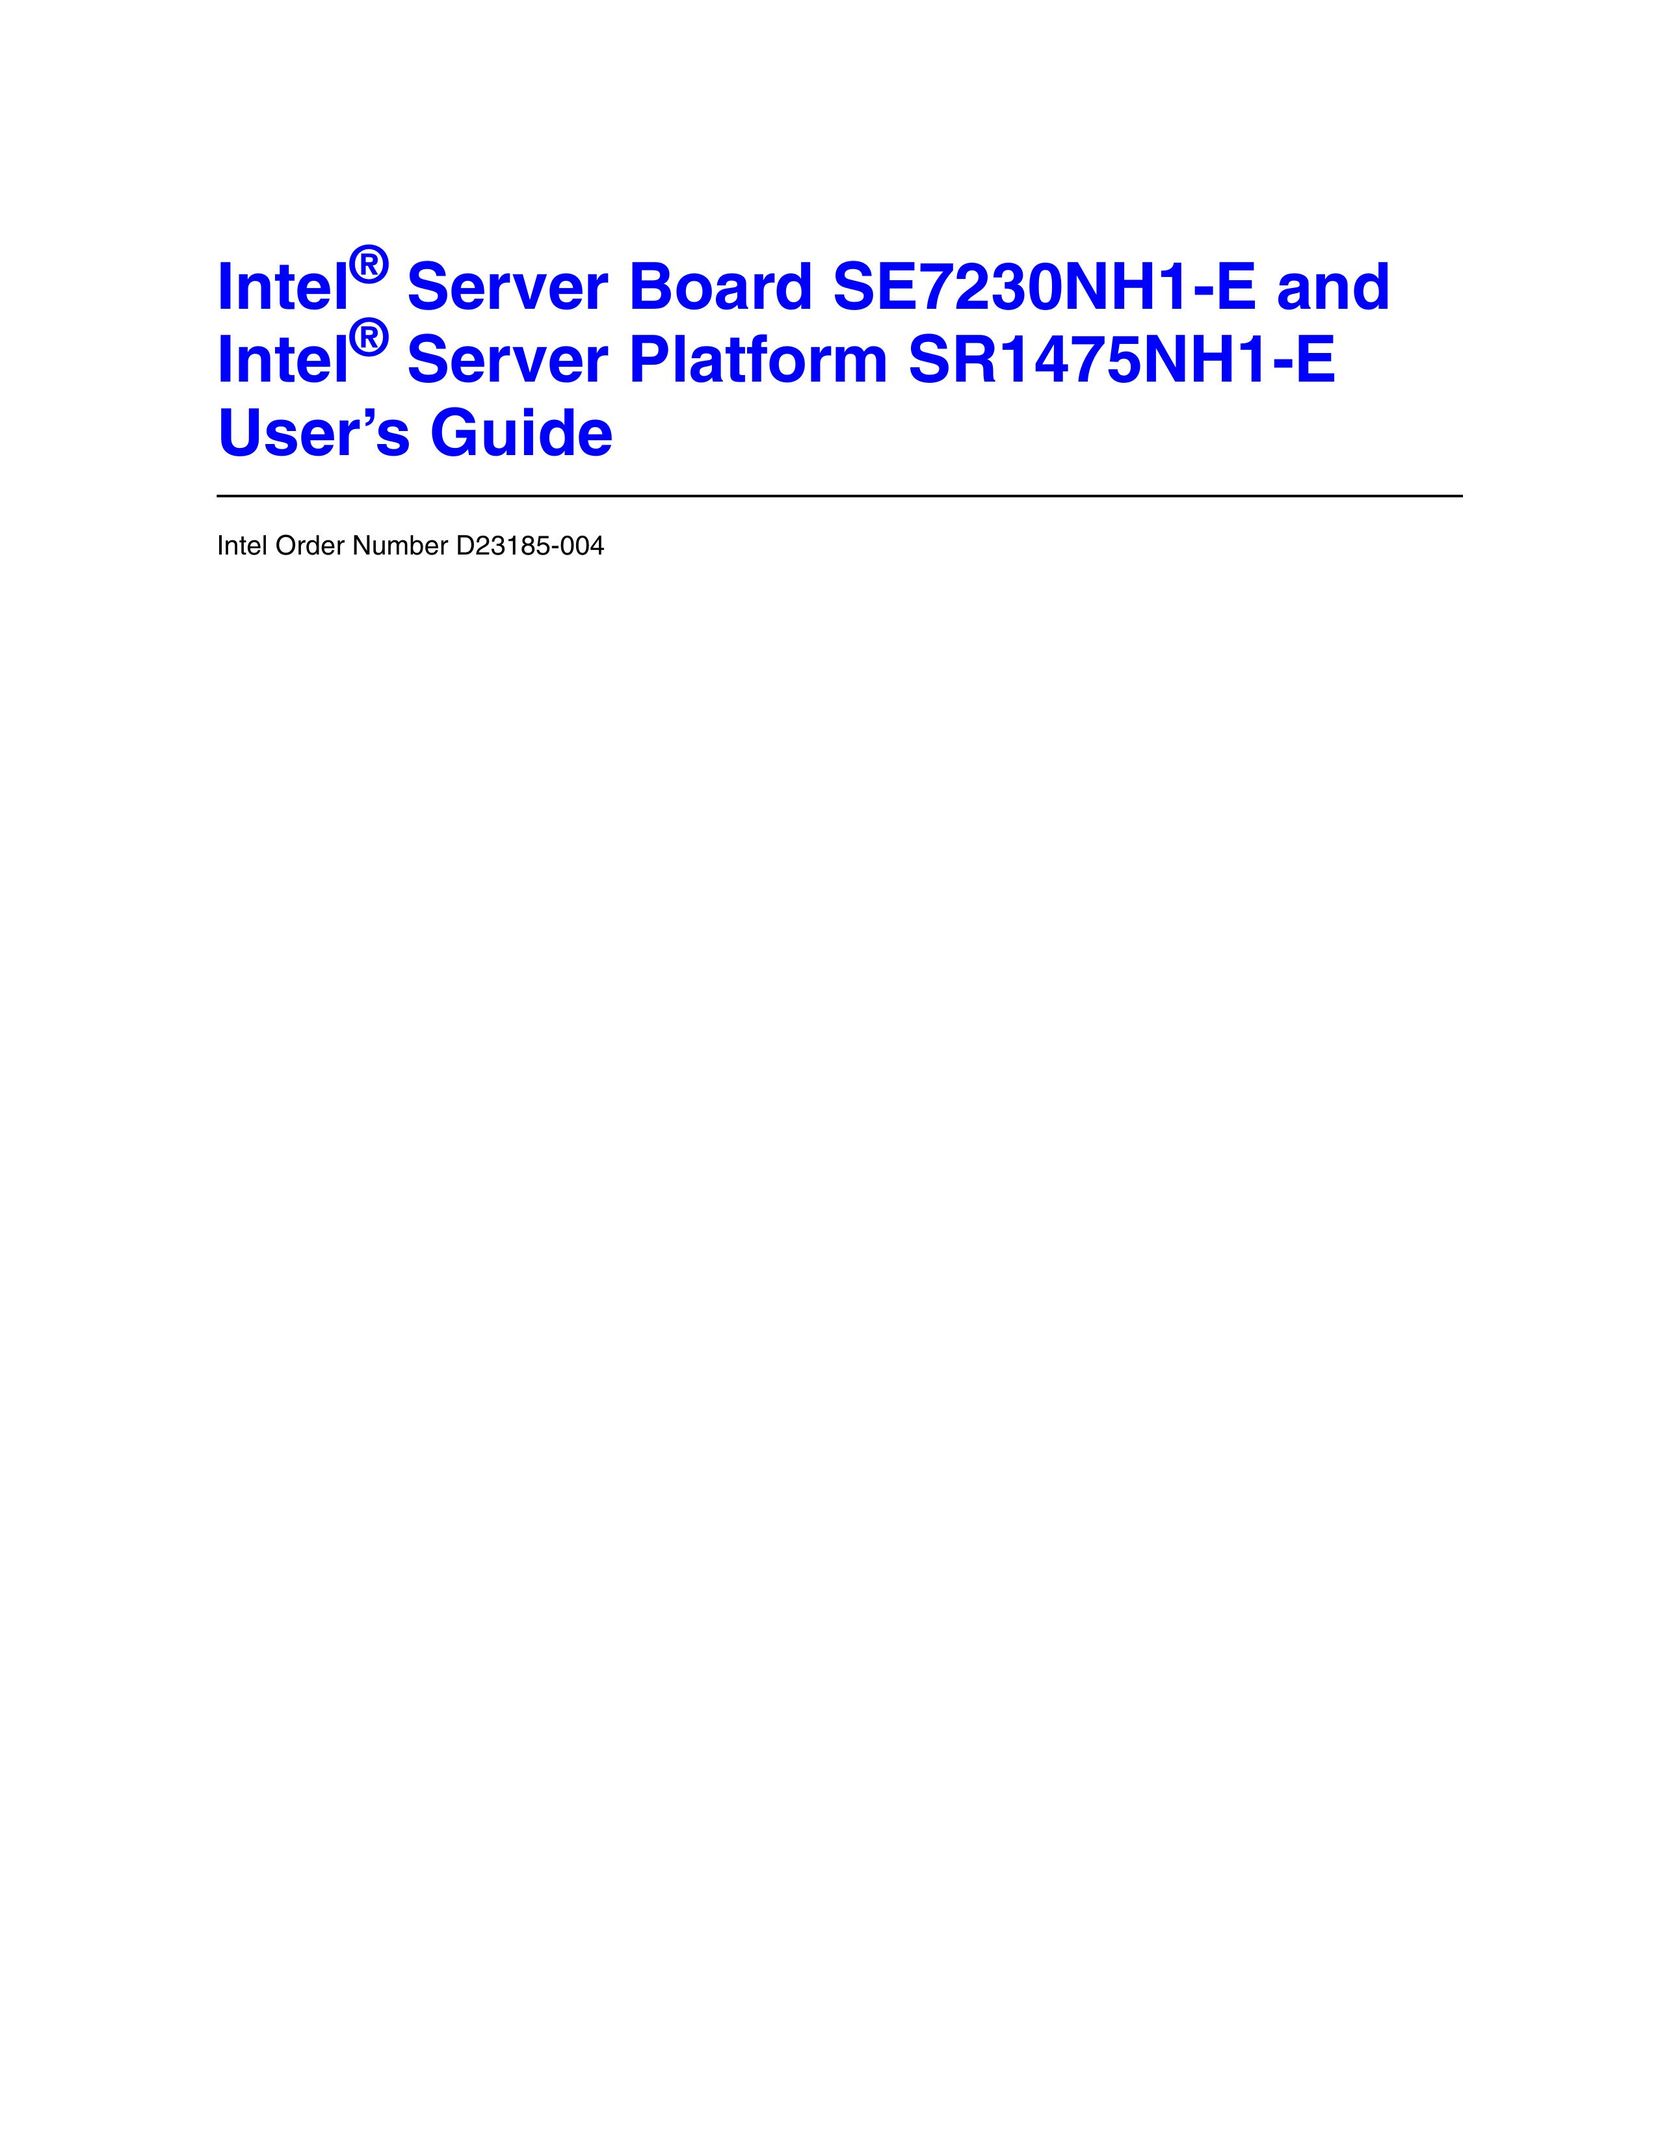 Intel SR1475NH1-E Server User Manual